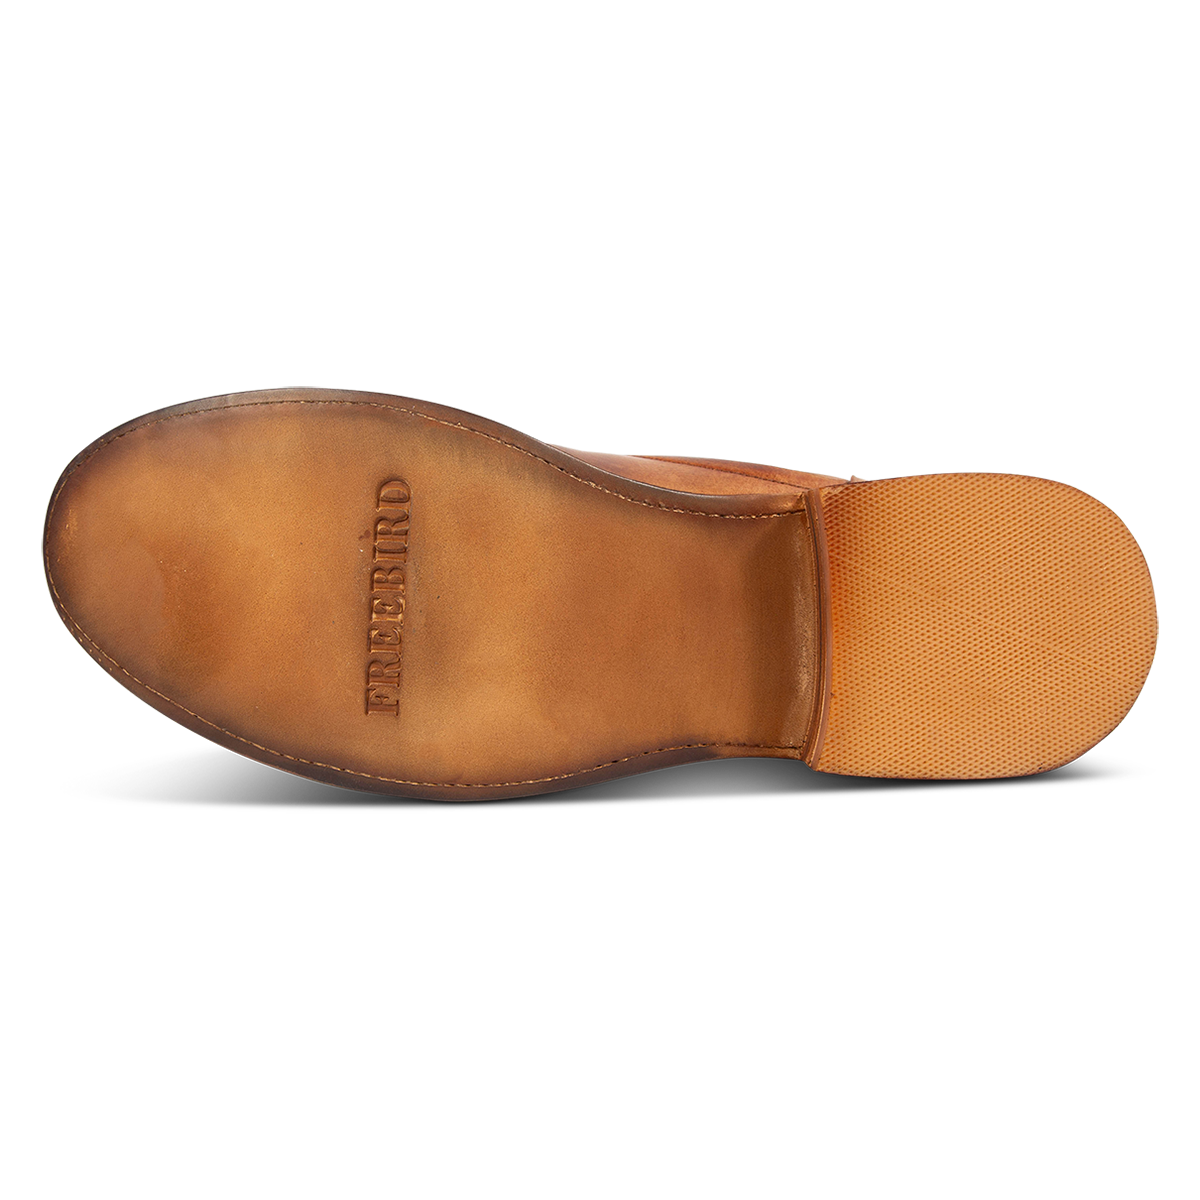 Leather imprinted sole FREEBIRD on men's Brooks cognac leather boot